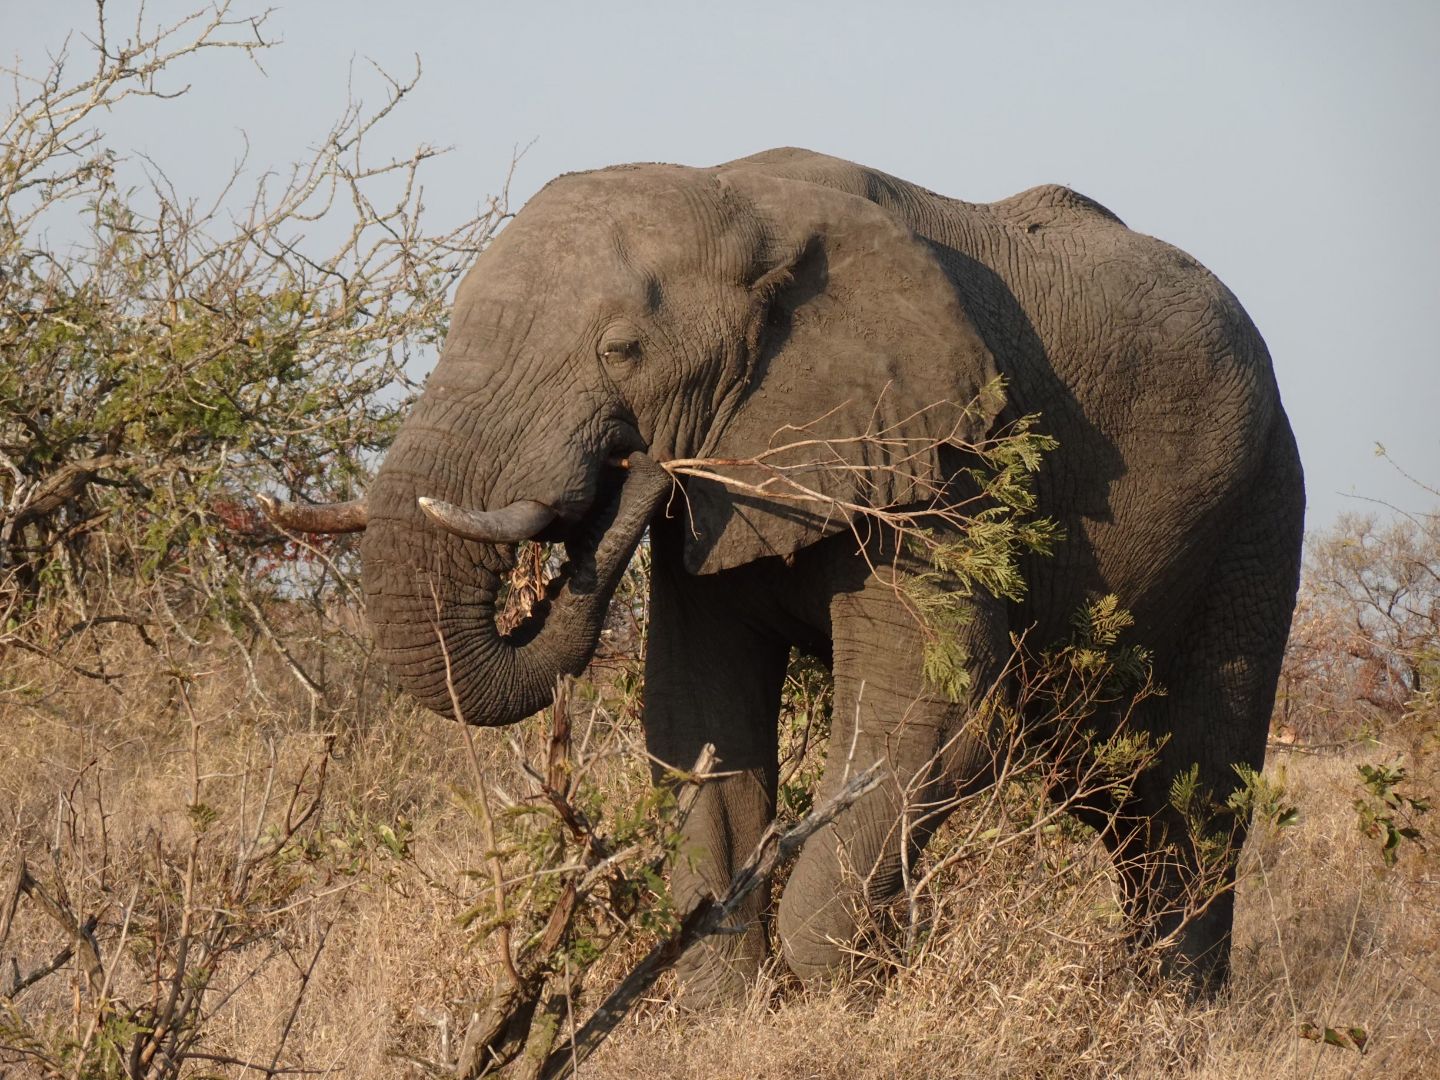 Elephant walking through savanah in South Africa